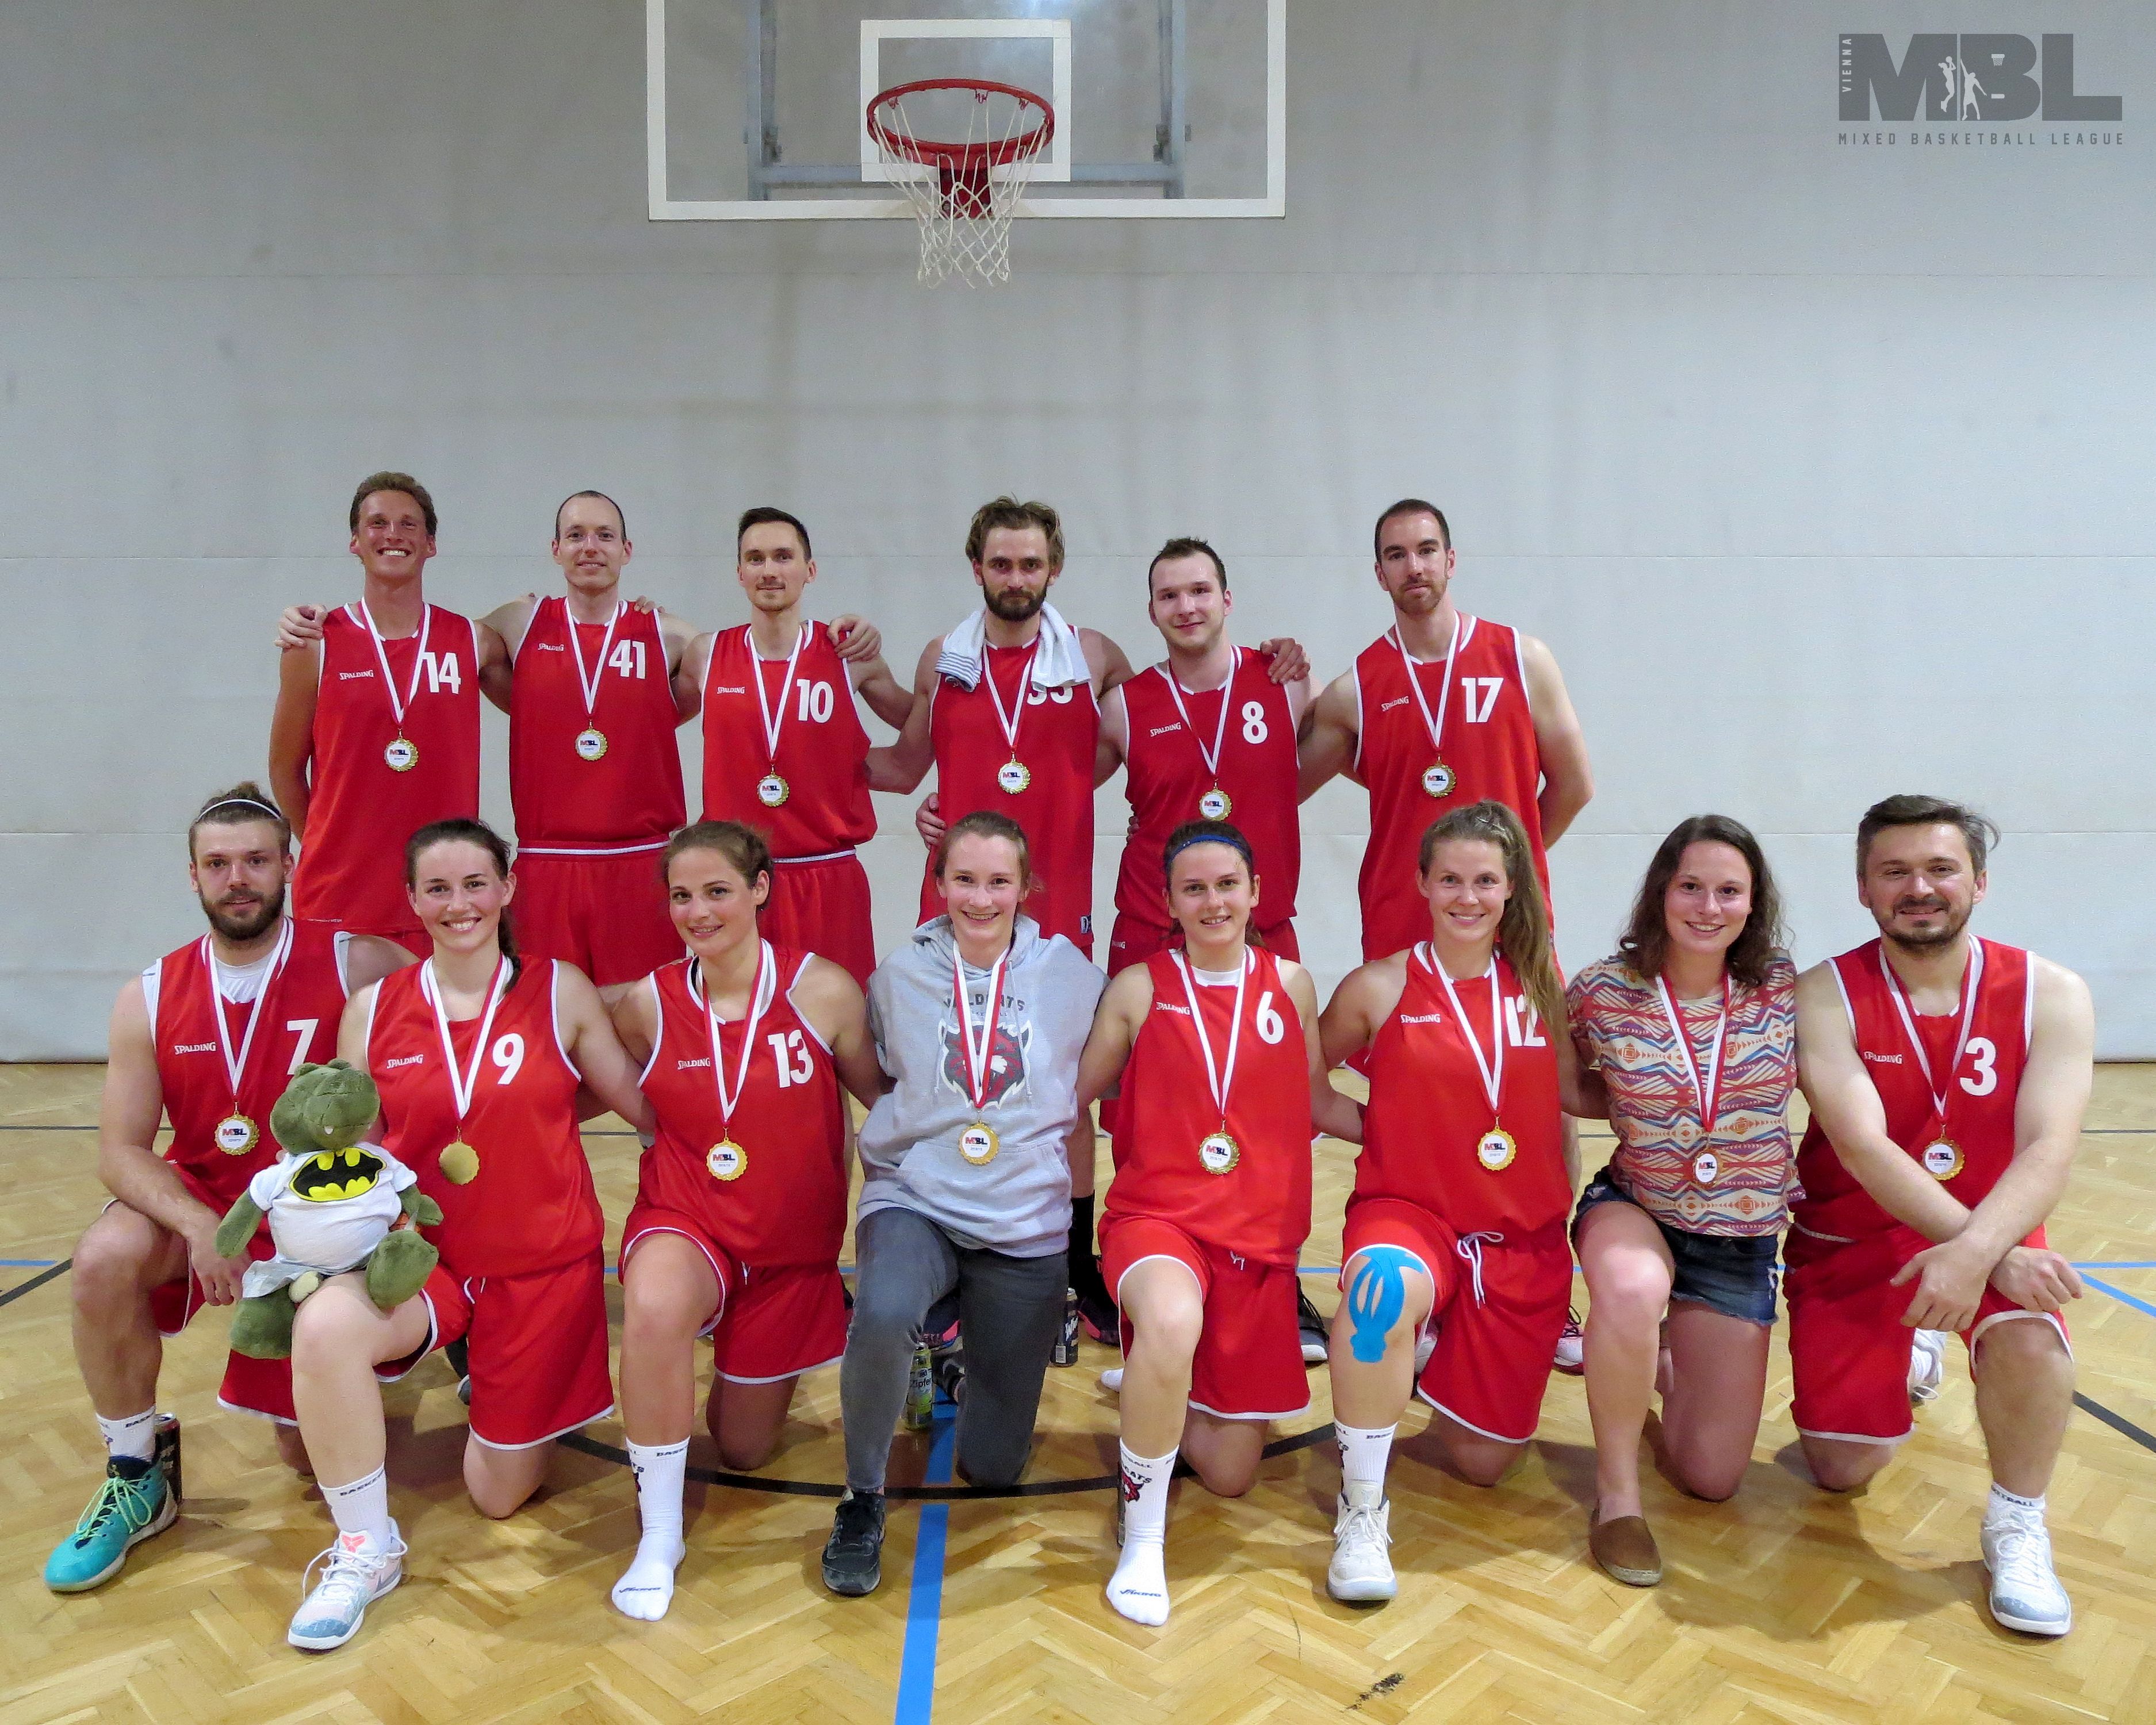 MBL-Sieger & Wiener Mixed Basketball Meister 2018/19: Wildcats (c) MBL